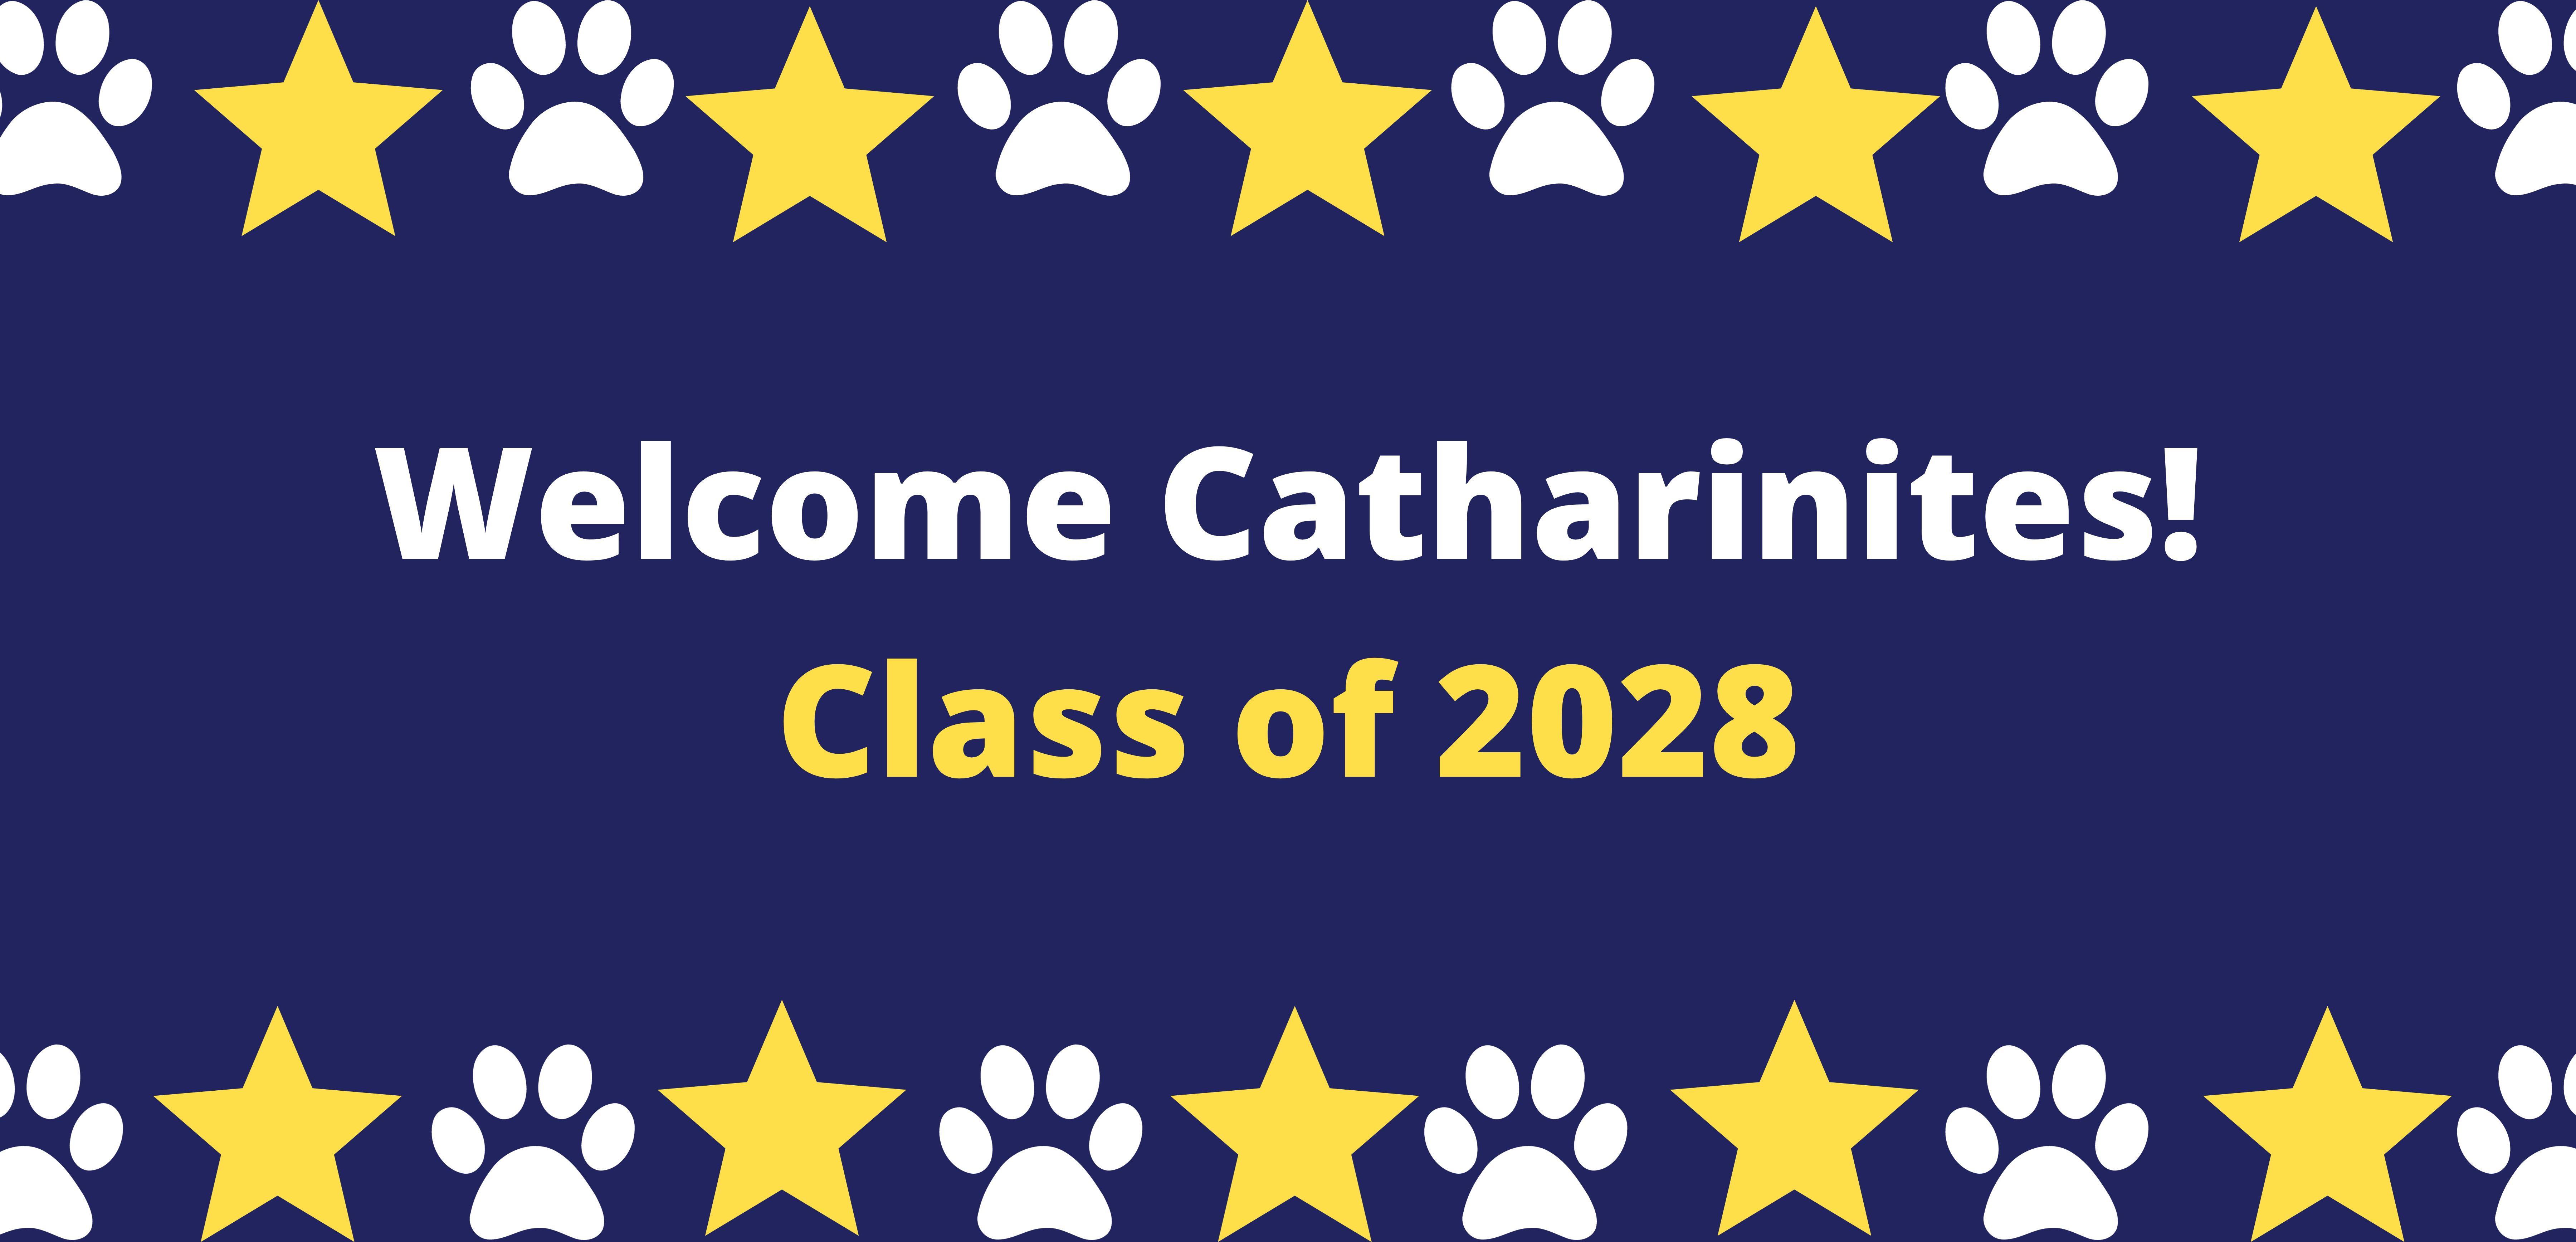 Welcome Catharinites